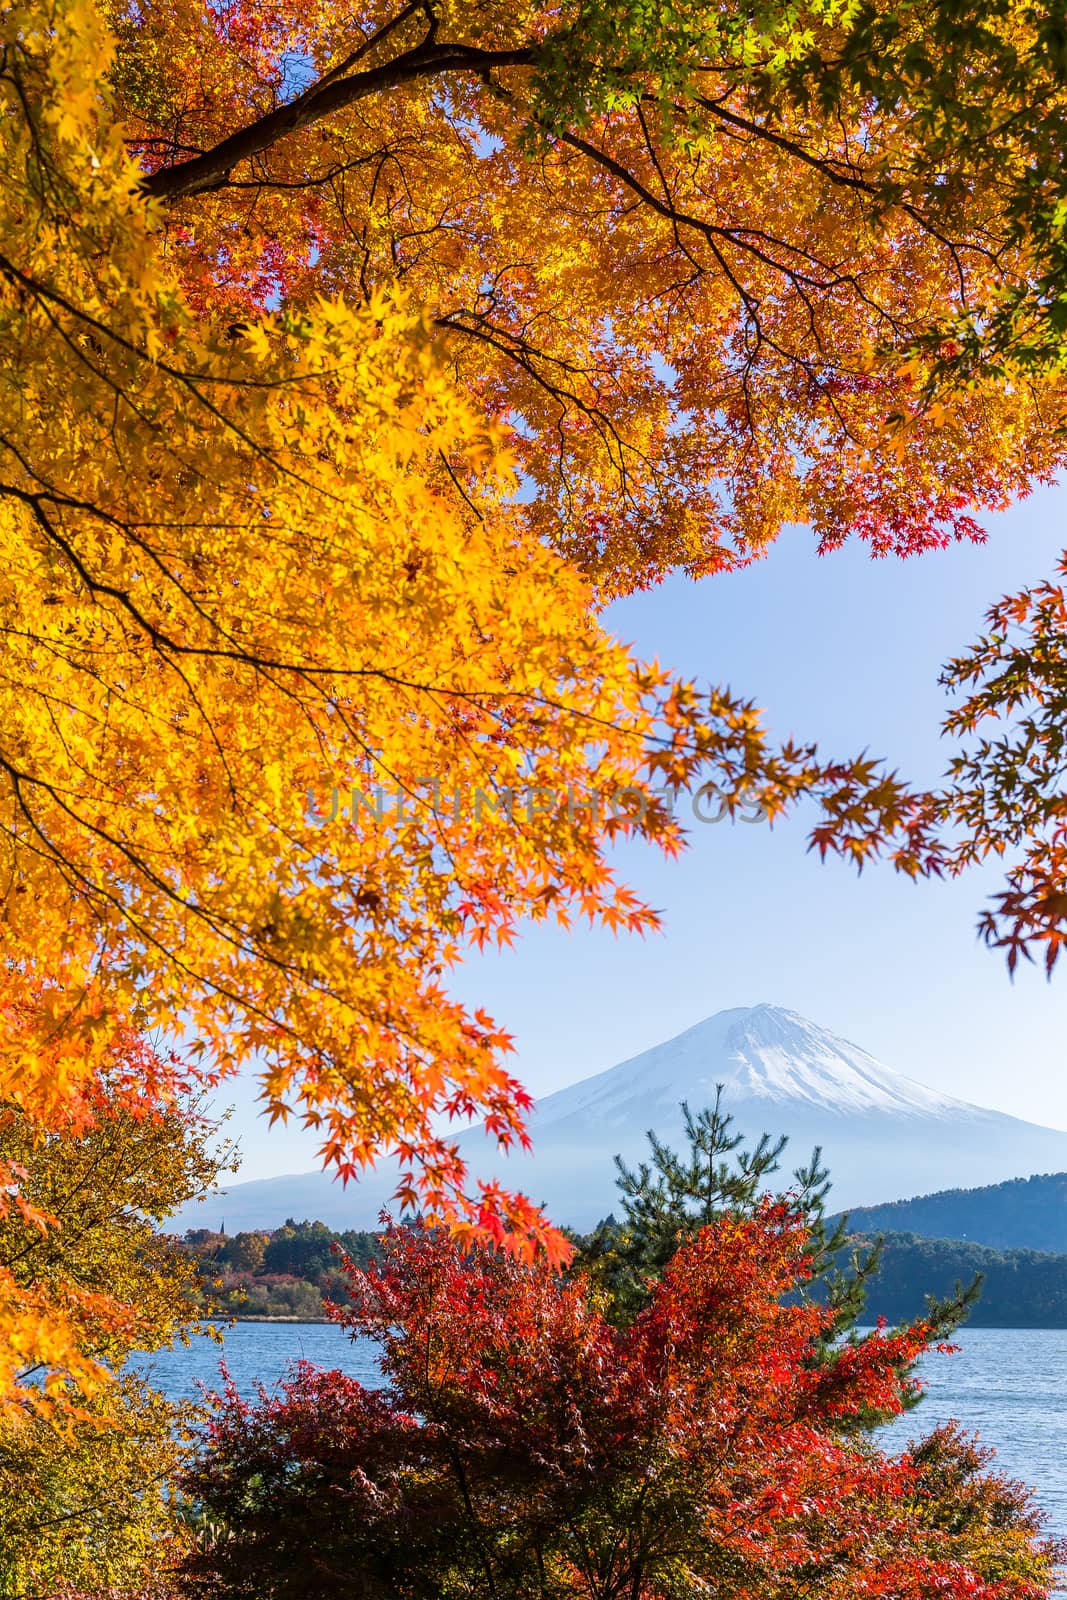 Mountain Fuji in autumn season by leungchopan